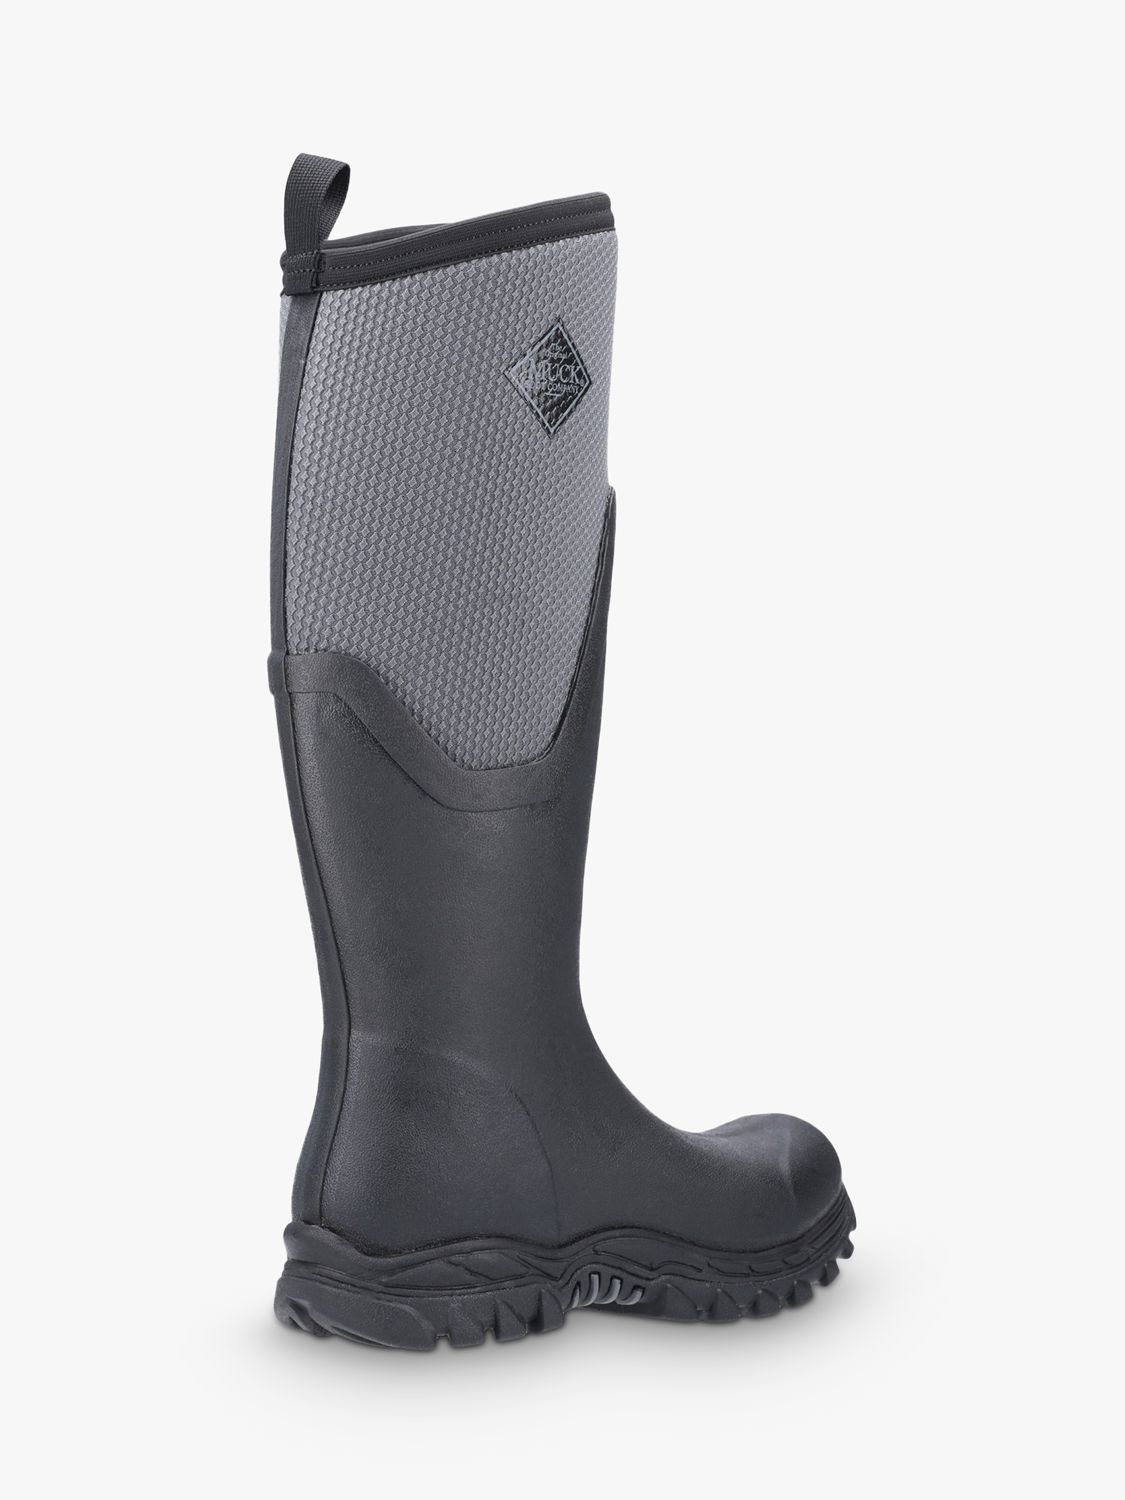 Muck Arctic Sport II Tall Wellington Boots, Black/Grey, 3